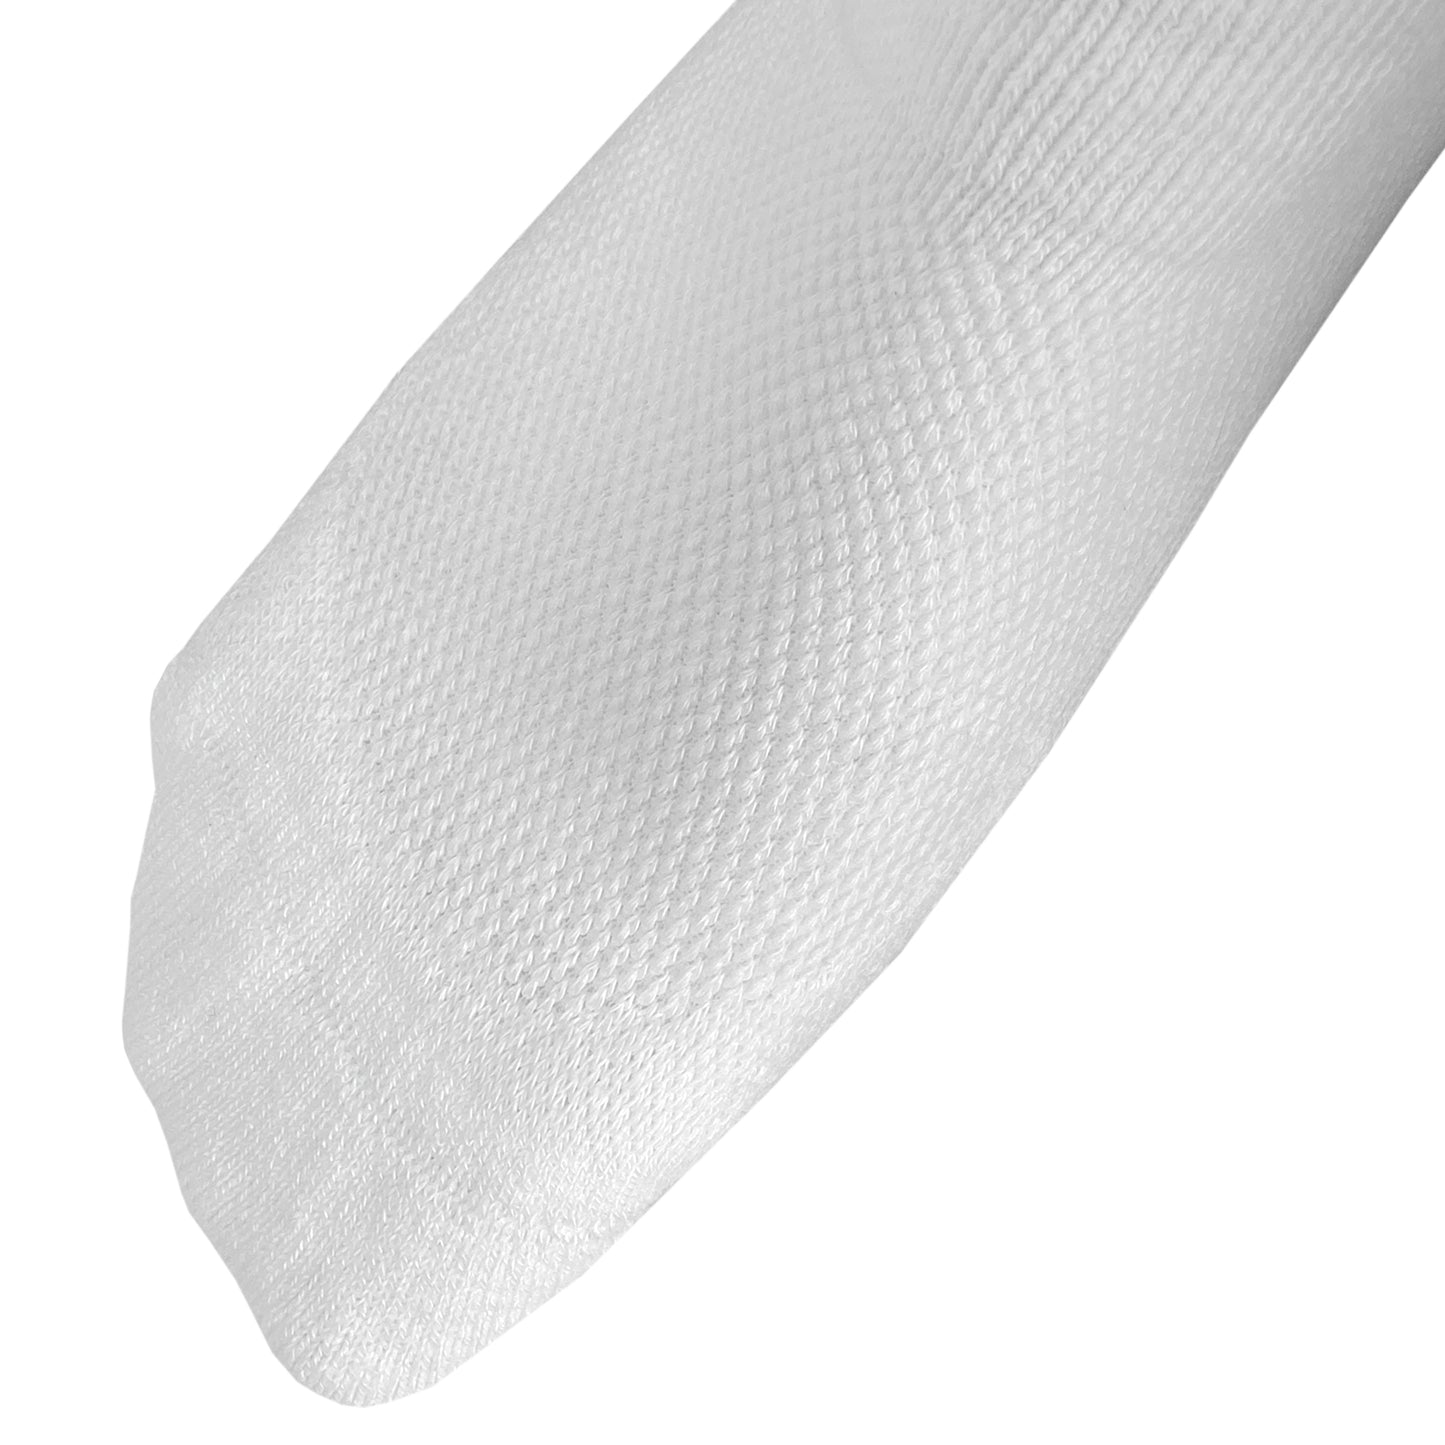 Lacoste Socks High-Cut Unisex (1PK) RA1095-52-522